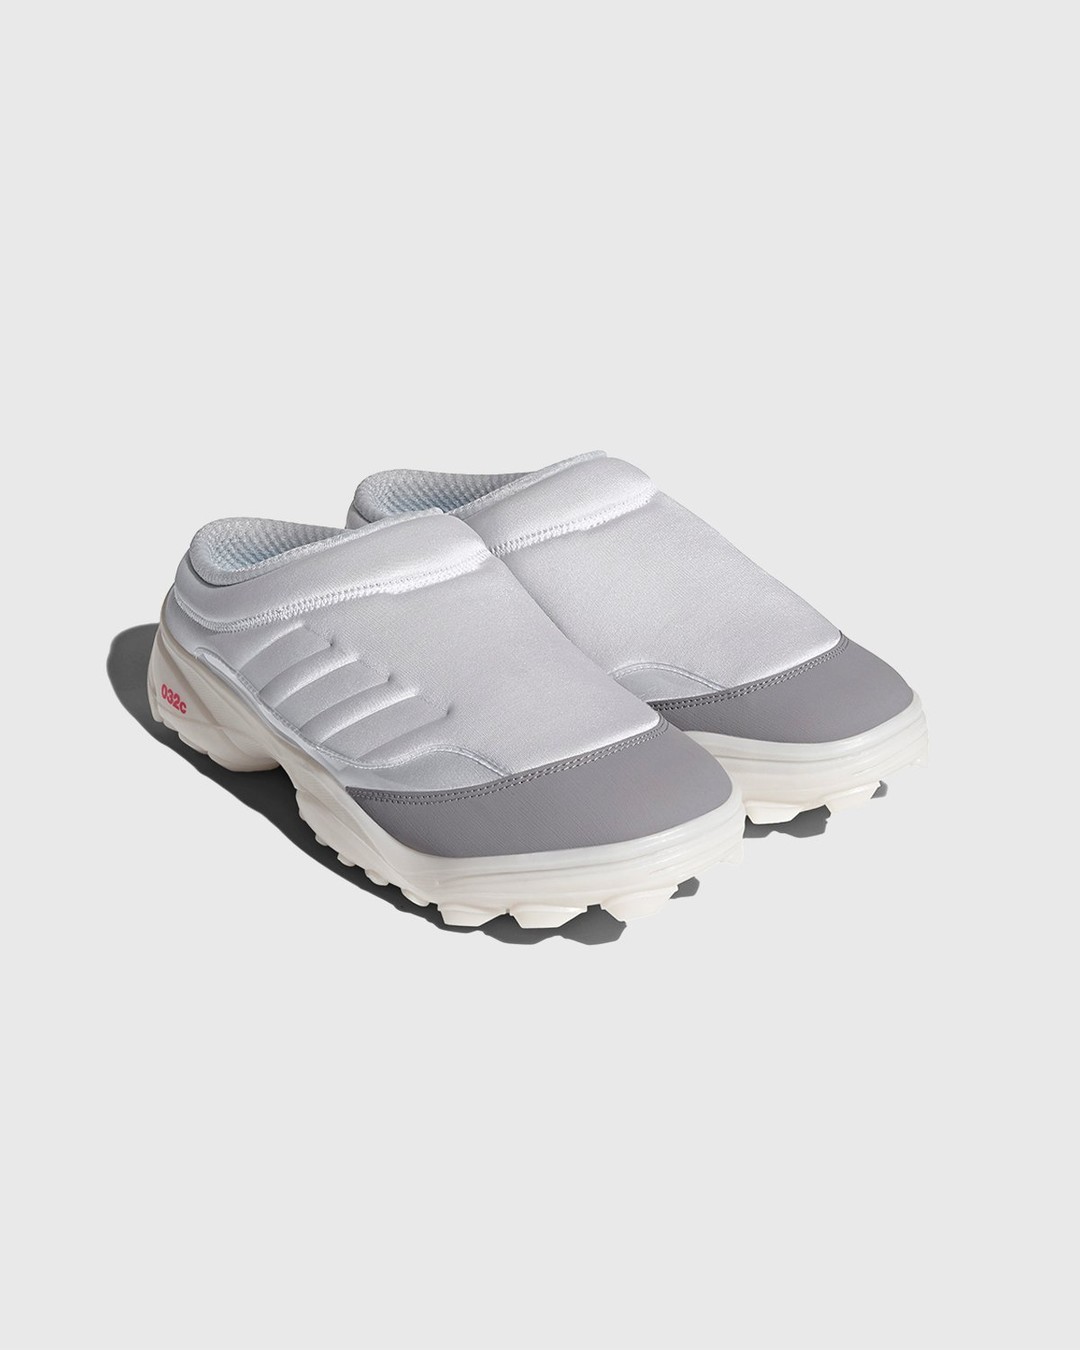 Adidas x 032c – GSG Mule Greone - Mules - White - Image 3